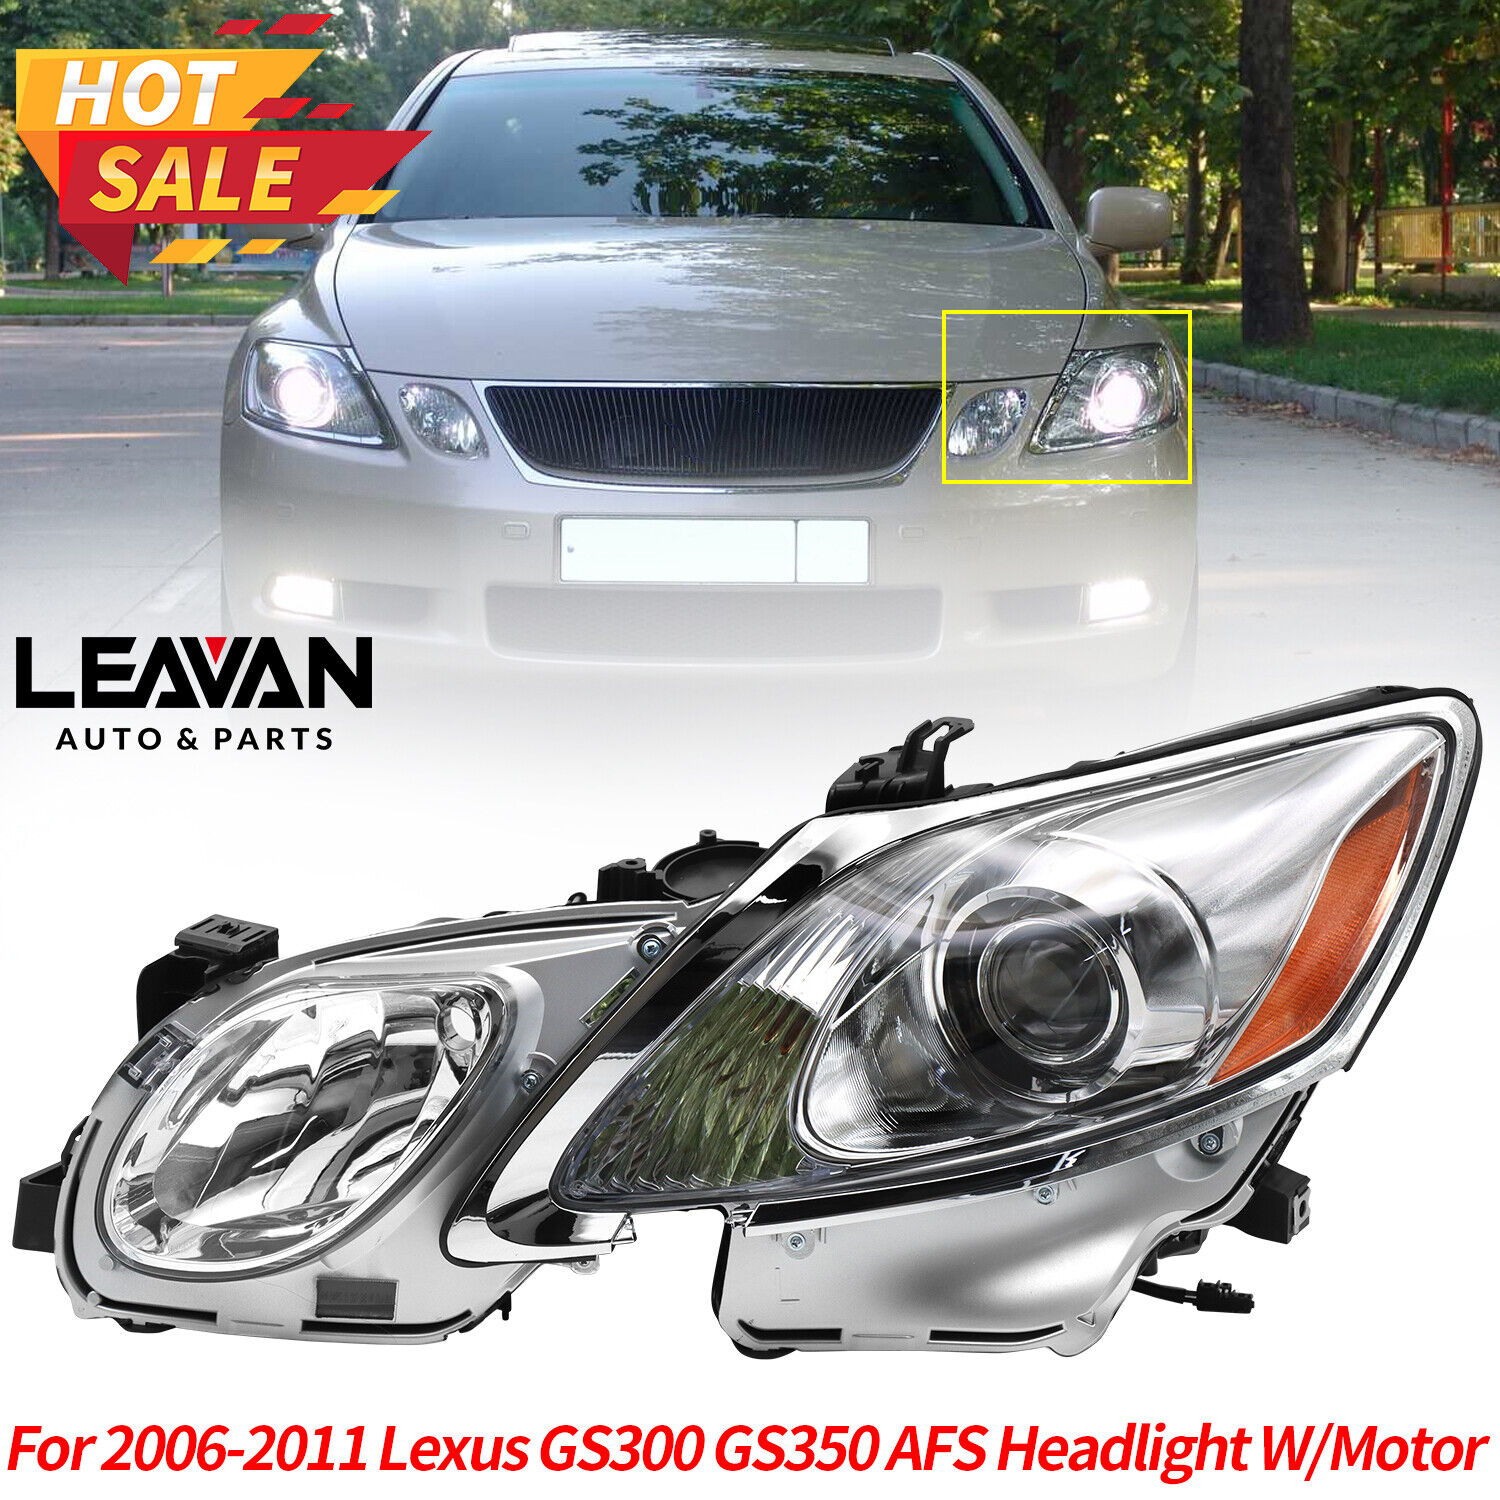 For 2006-2011 Lexus GS300 GS350 GS450H GS460 Headlight HID Xenon W/AFS Left Side